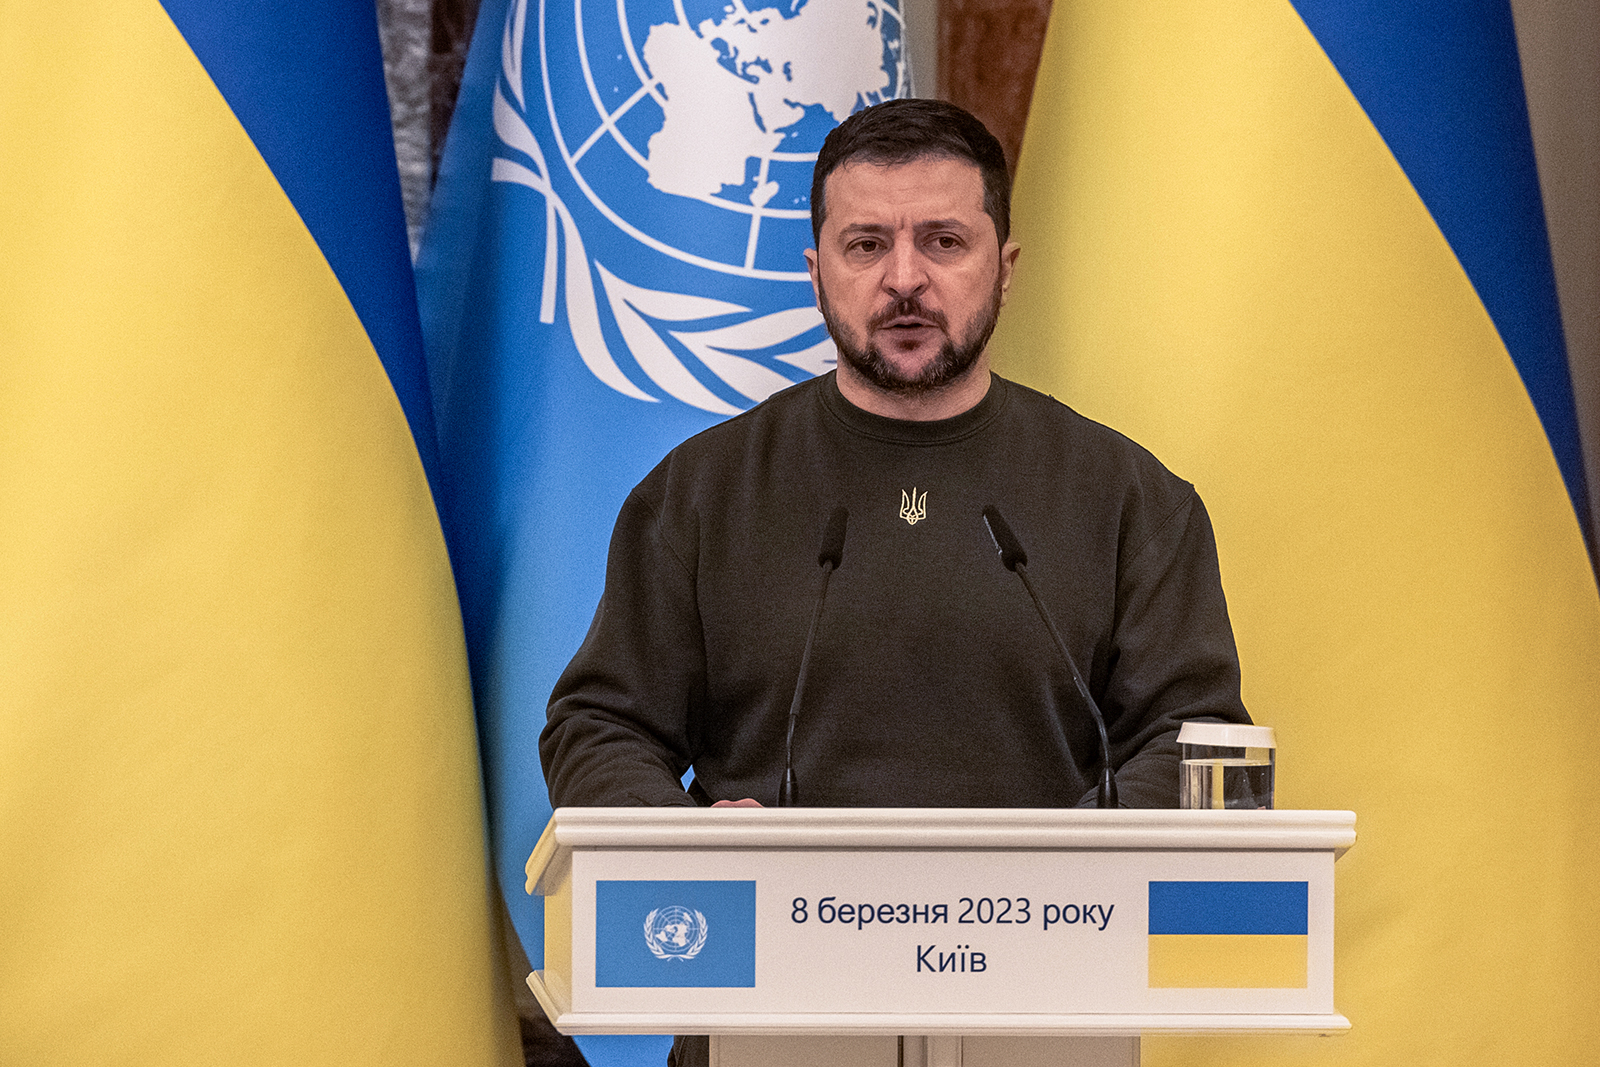 Volodymyr Zelensky delivers a speech in Kyiv on March 8.